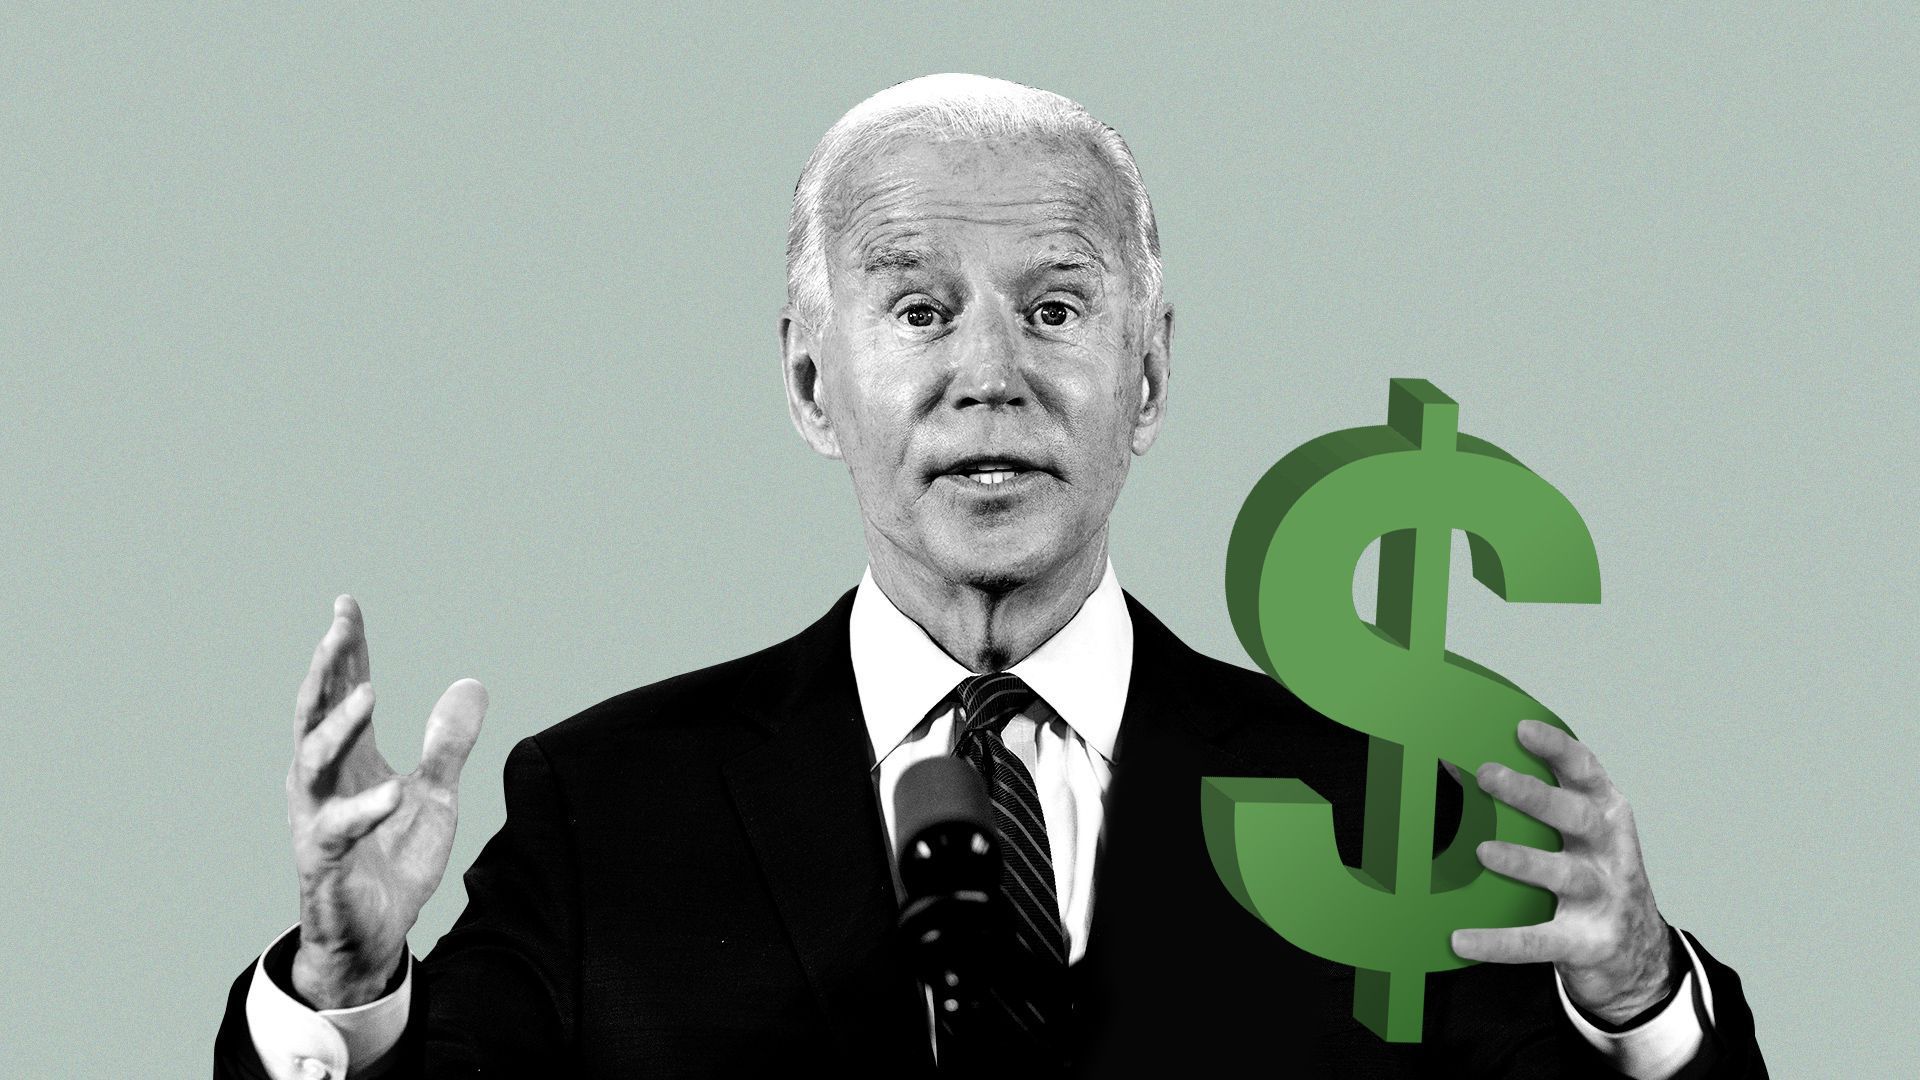 Illustration of President Biden holding a dollar sign.